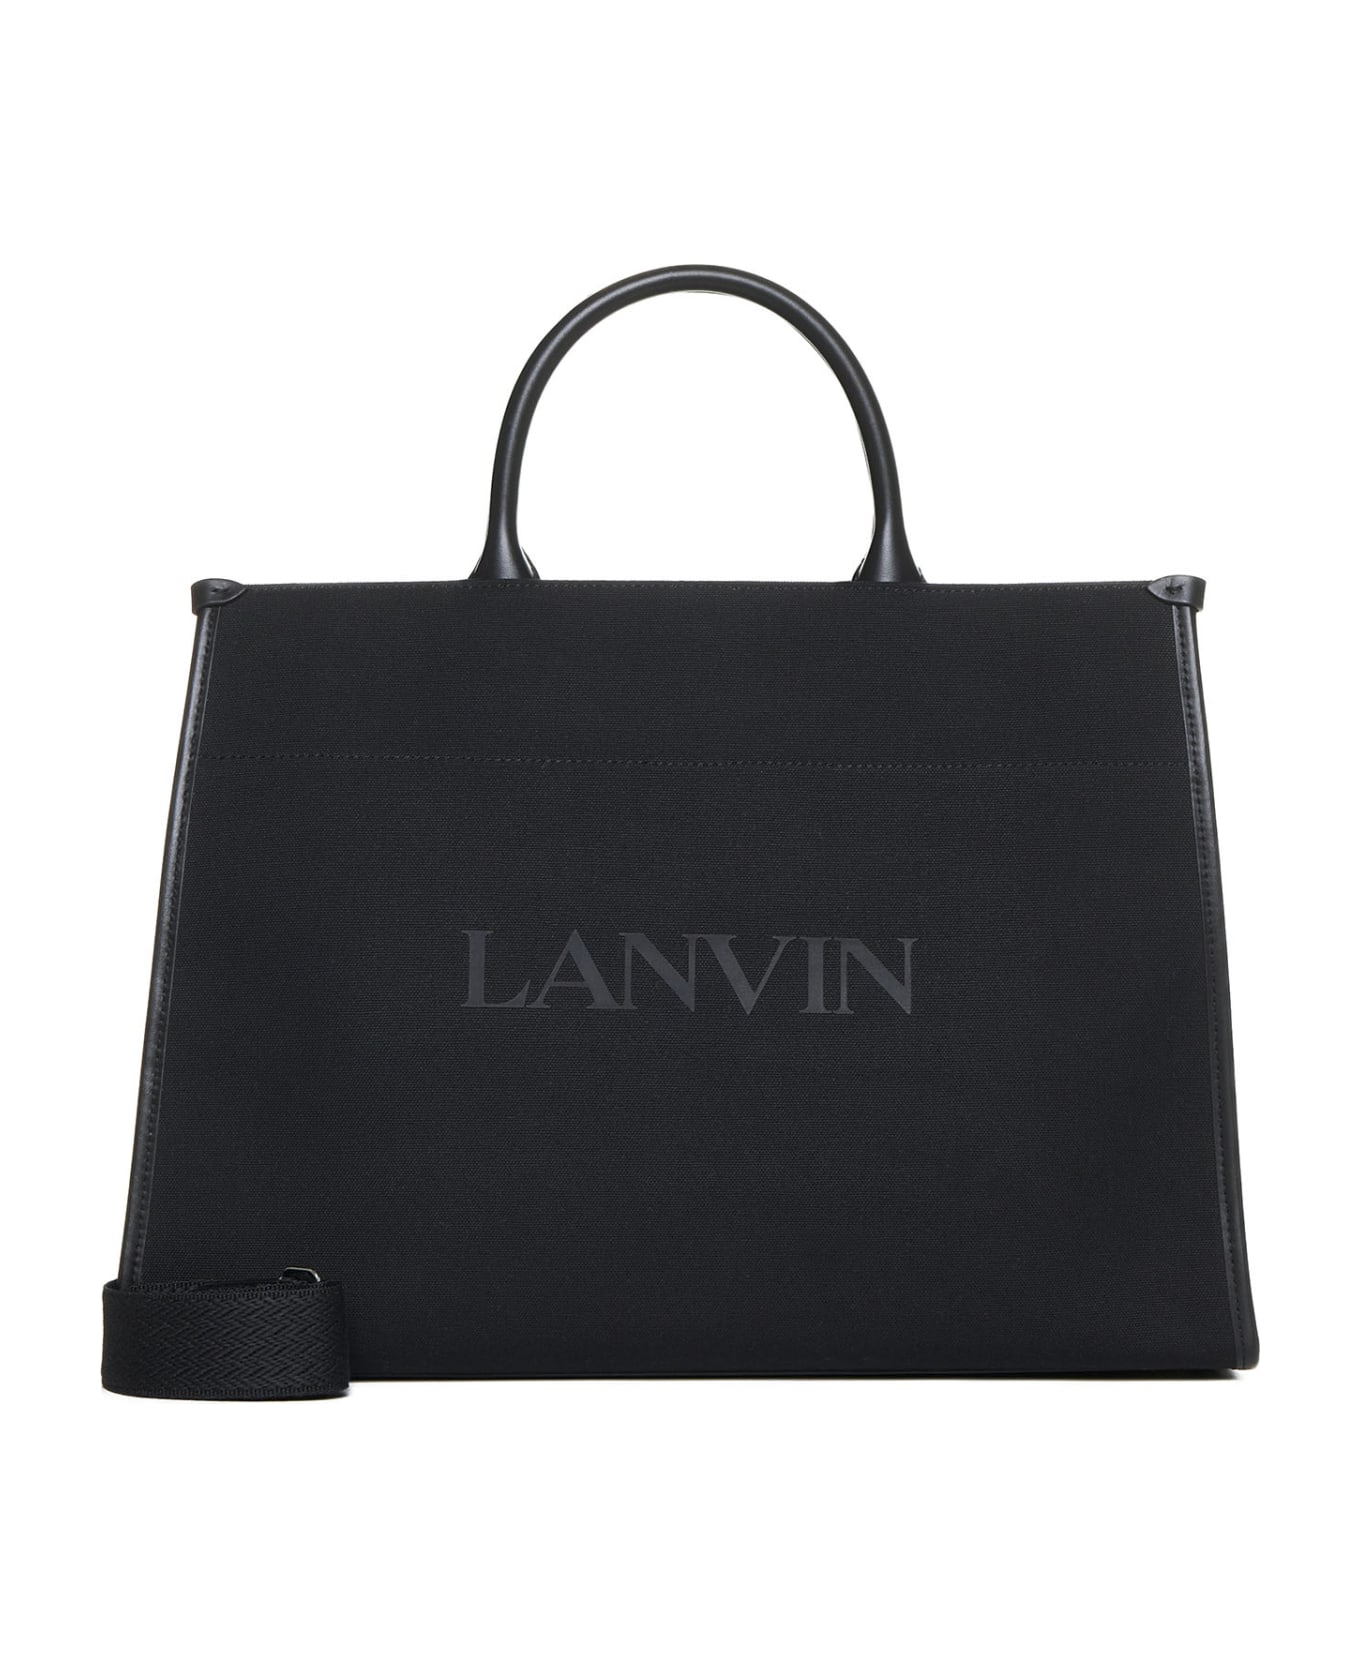 Lanvin Bag - Black